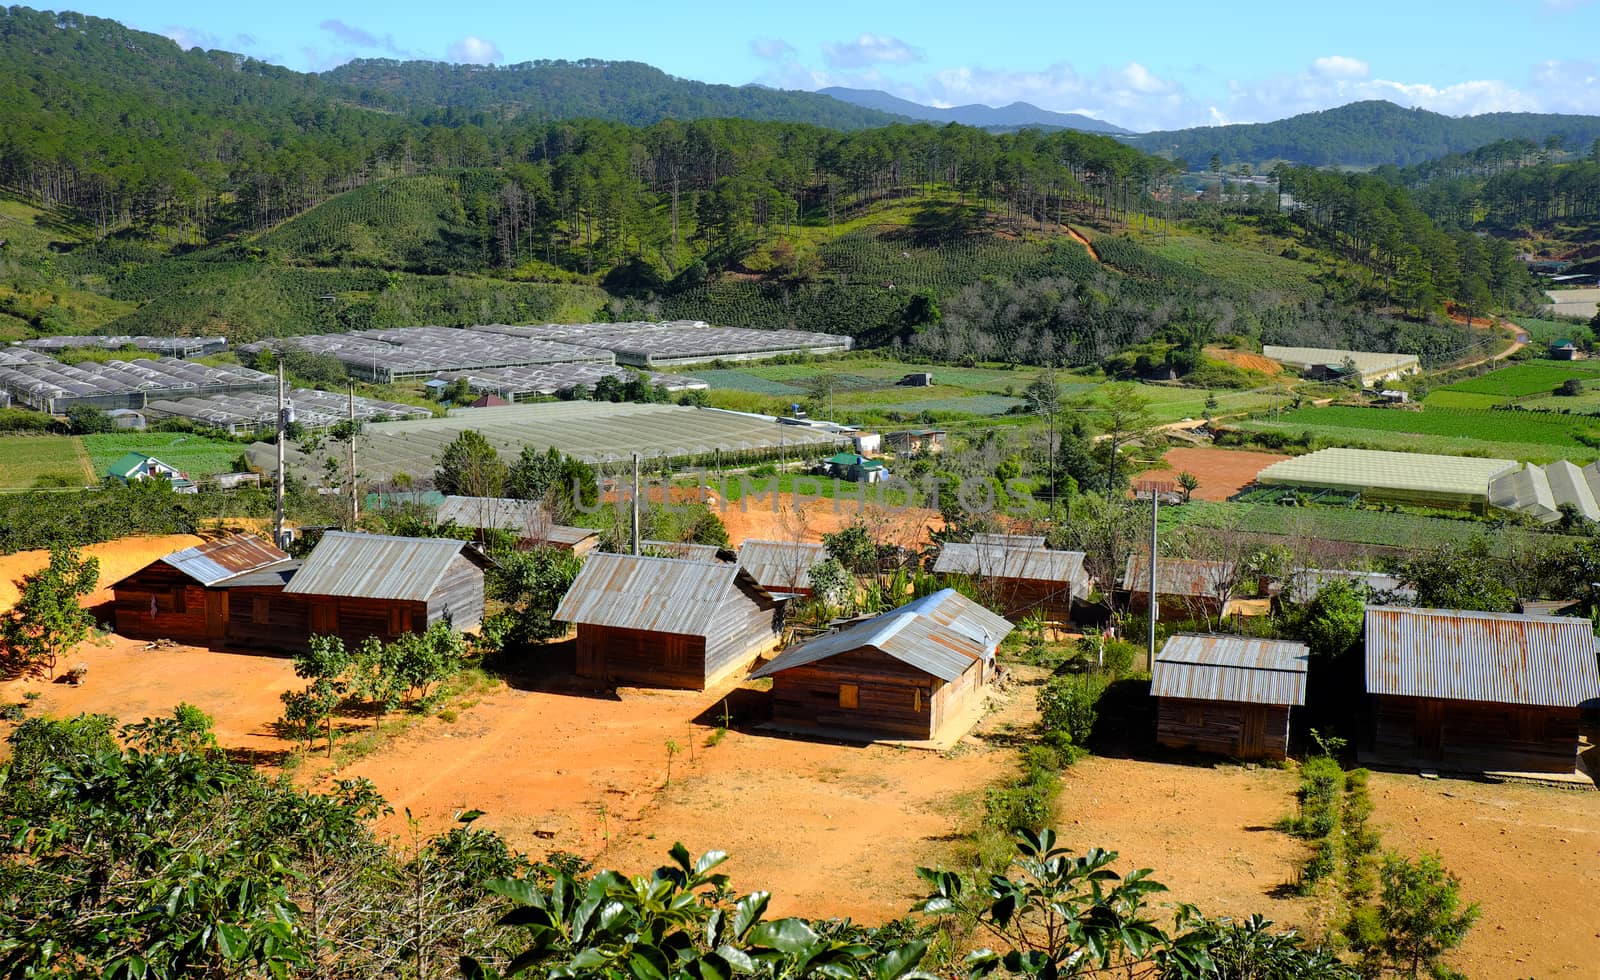 Dalat countryside, housing, settle, landscape by xuanhuongho